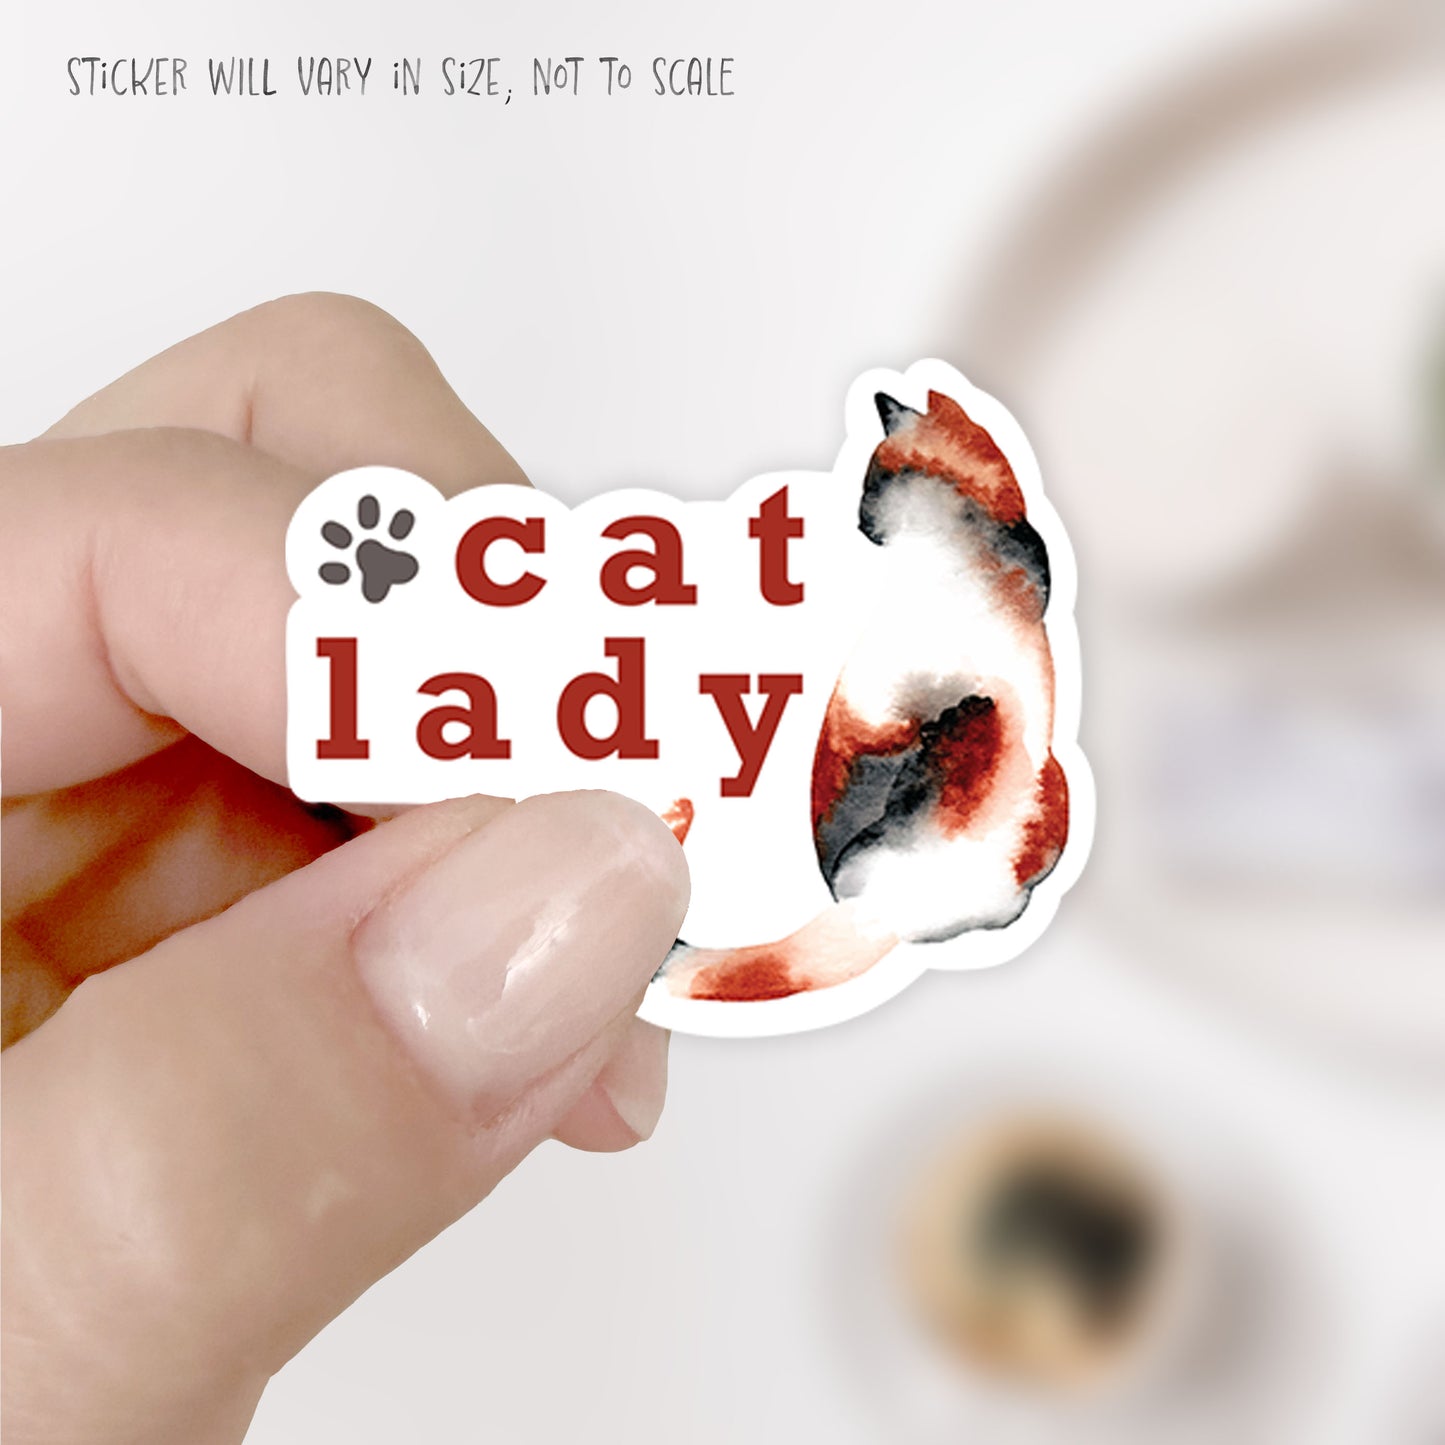 cat lady stickers